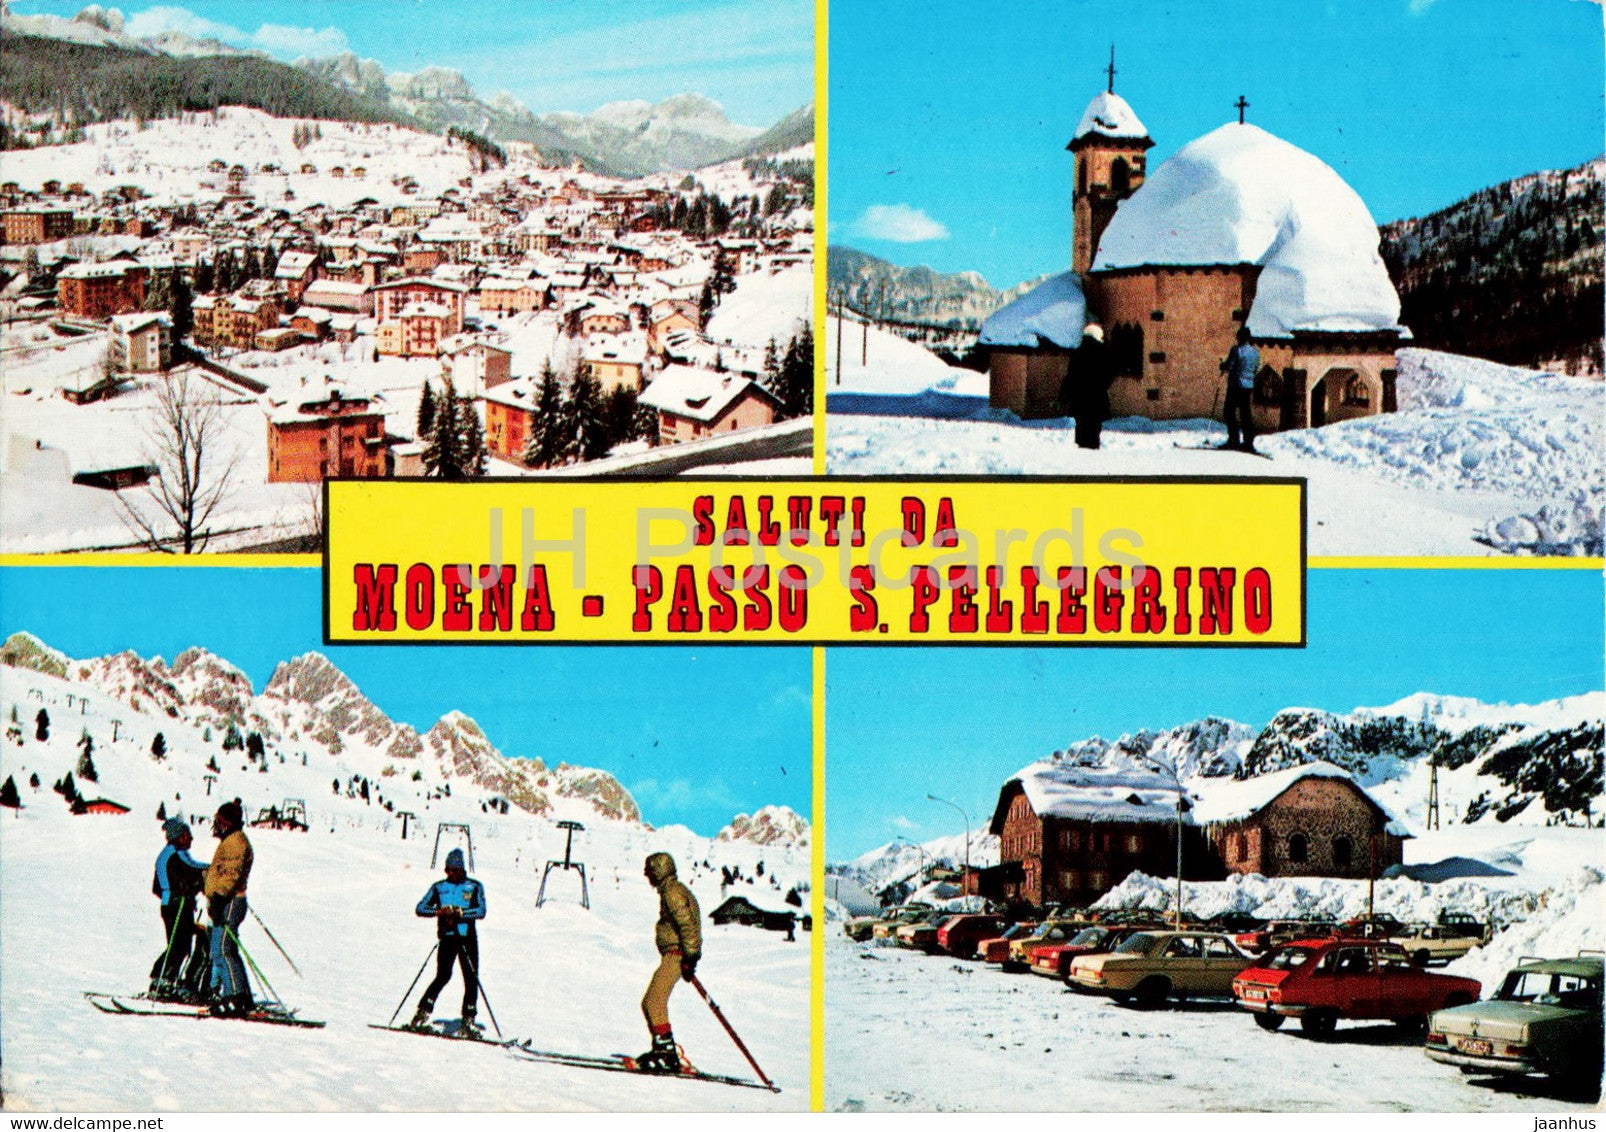 Saluti da Moena - Passo S Pellegrino - skiing - car - 1978 - Italy - used - JH Postcards